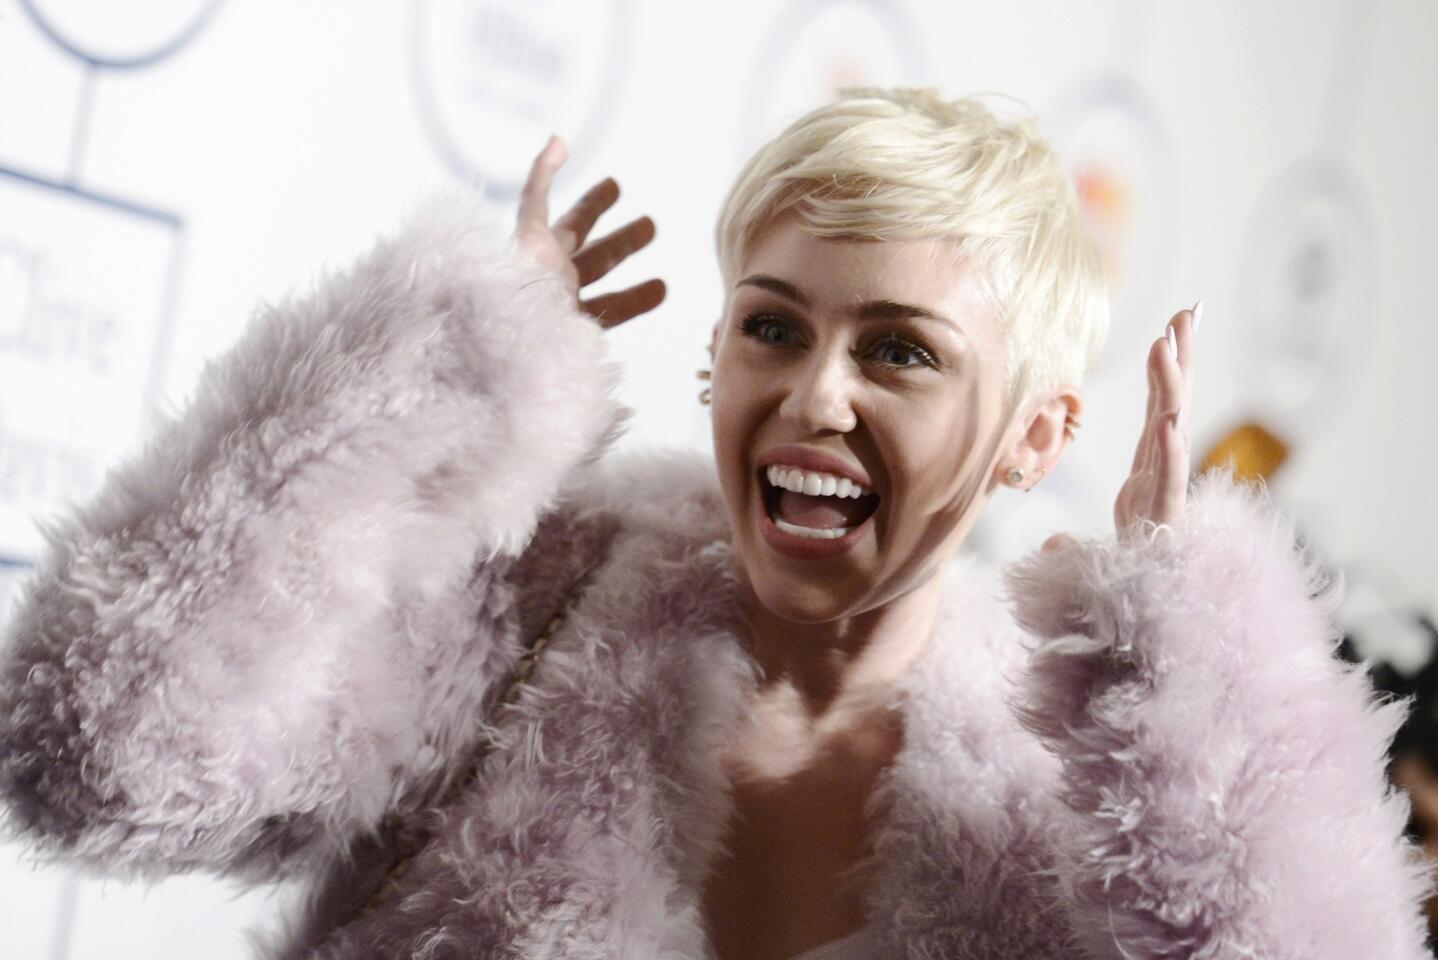 Miley Cyrus hospitalized, cancels 'Bangerz' concerts